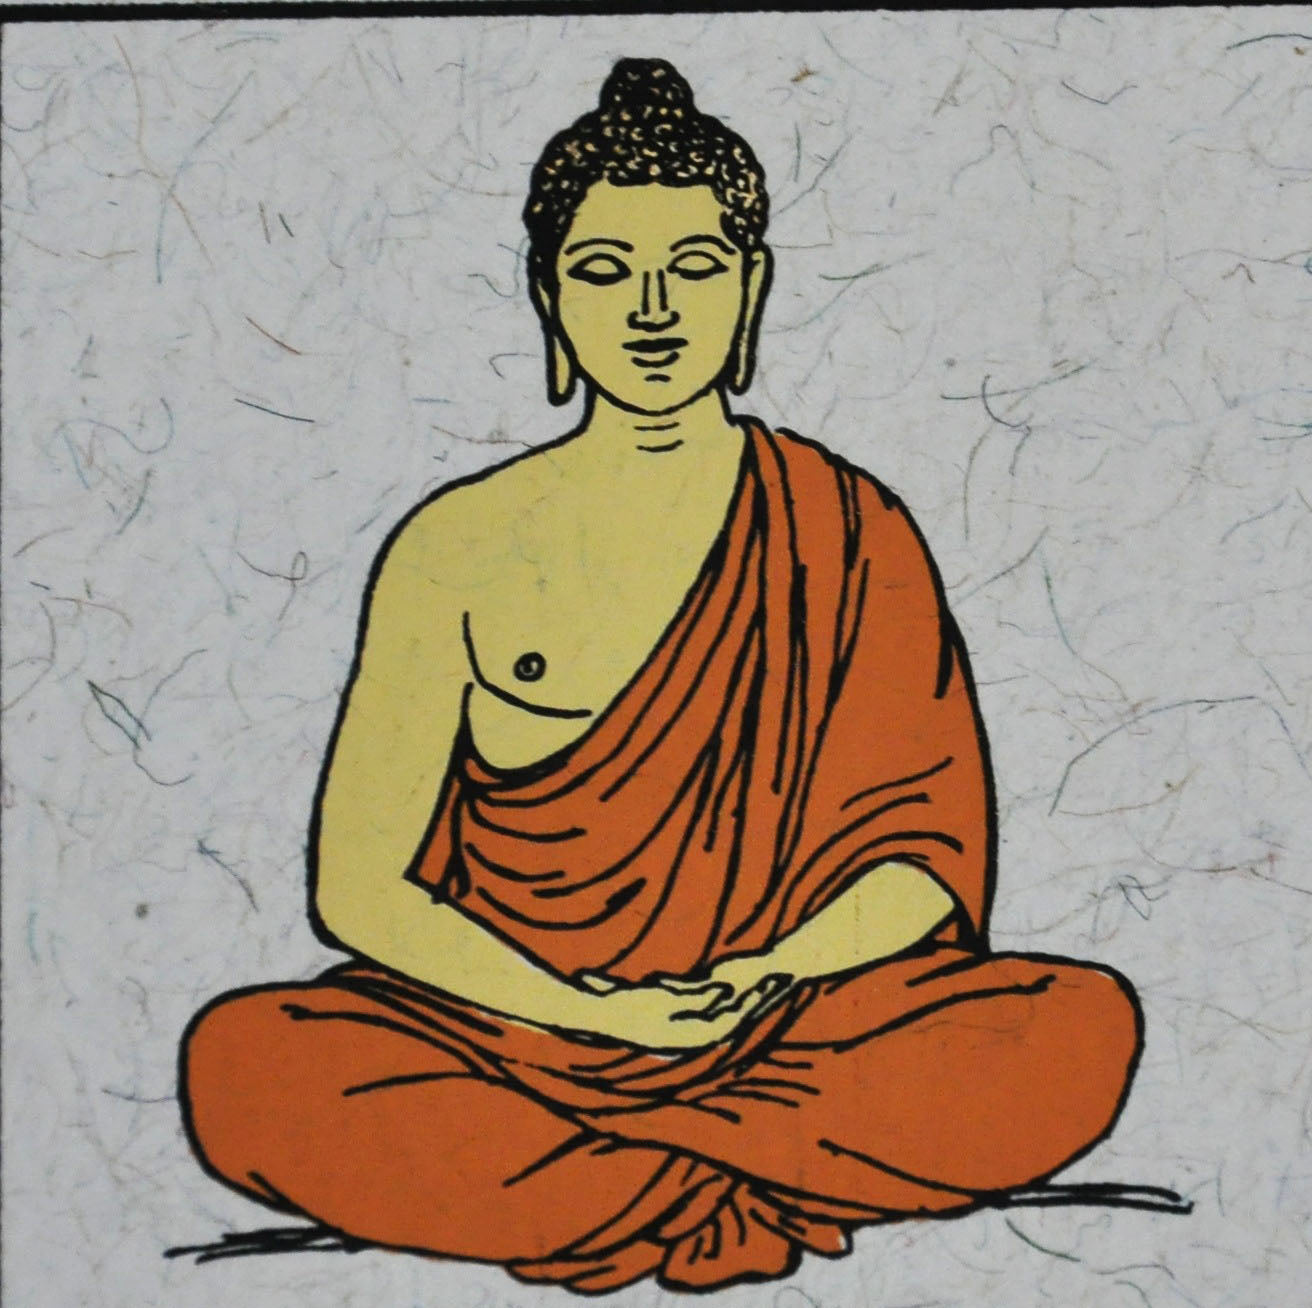 La merveilleuse légende de Siddharta bouddhisme